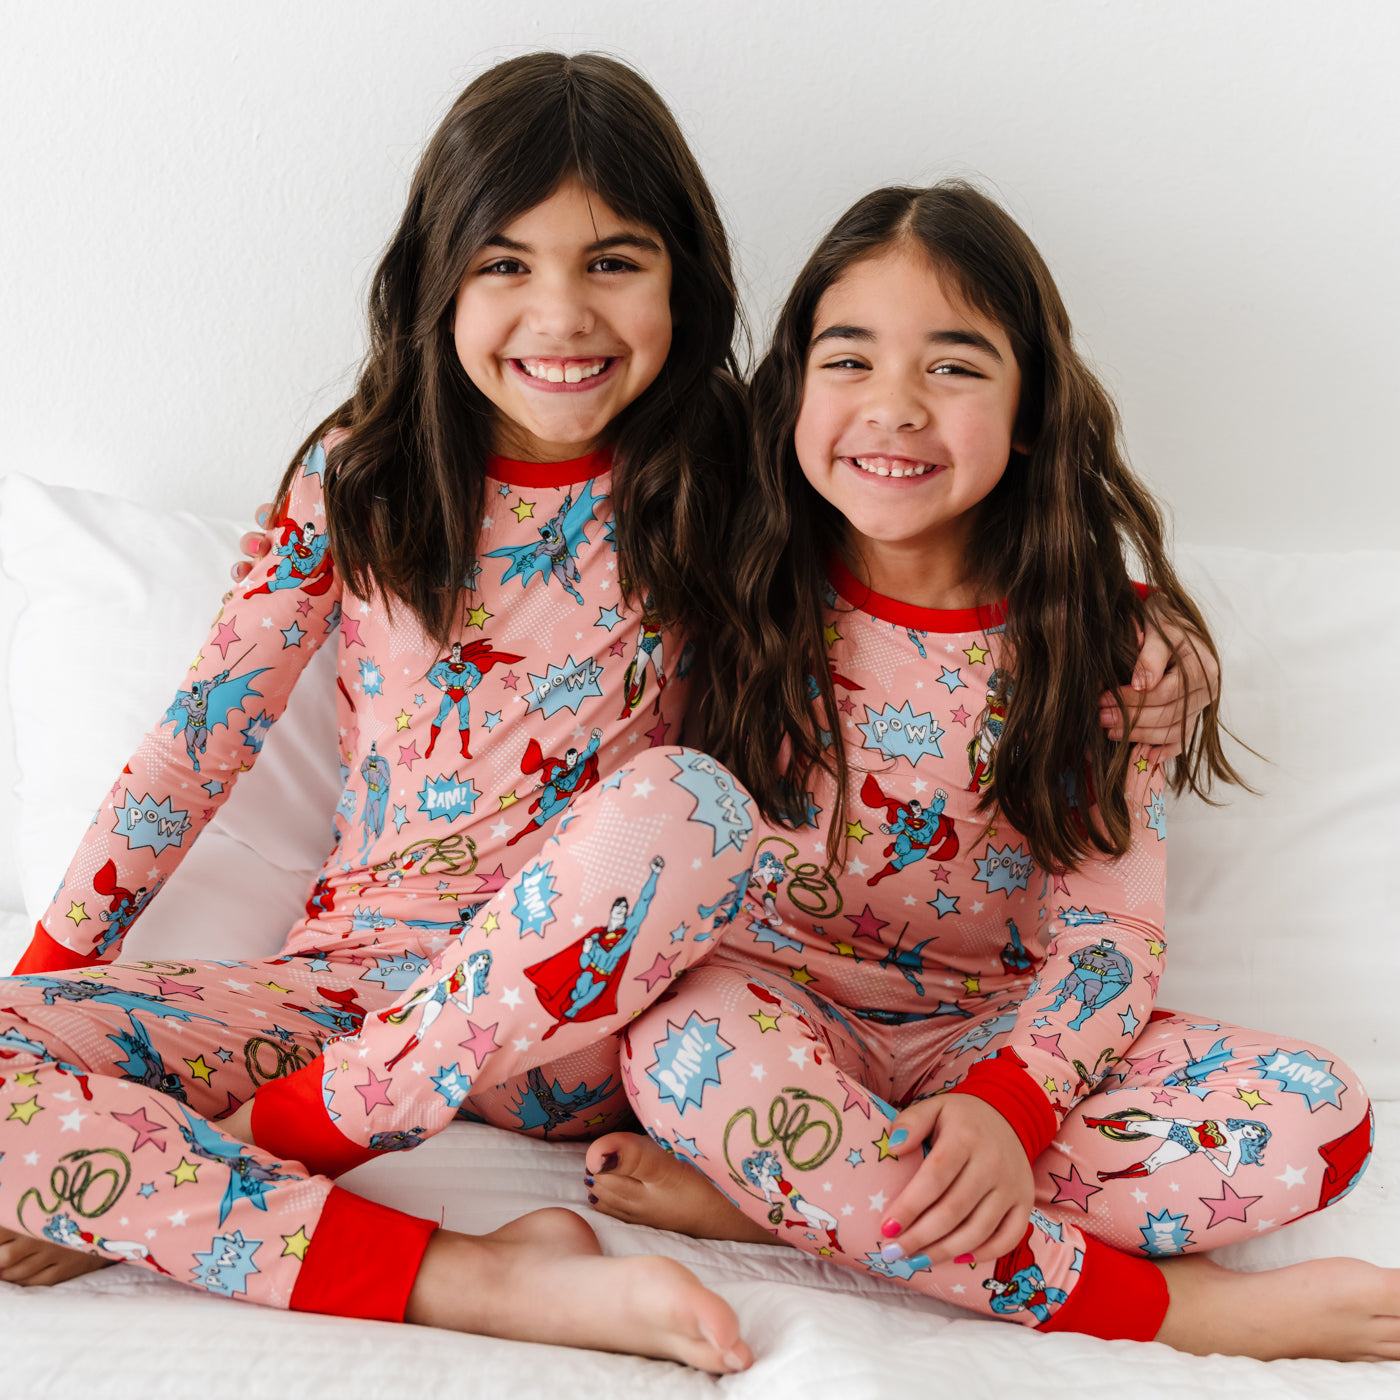 The Cloud 9 Pajama Set - Main  Most comfortable pajamas, Chic